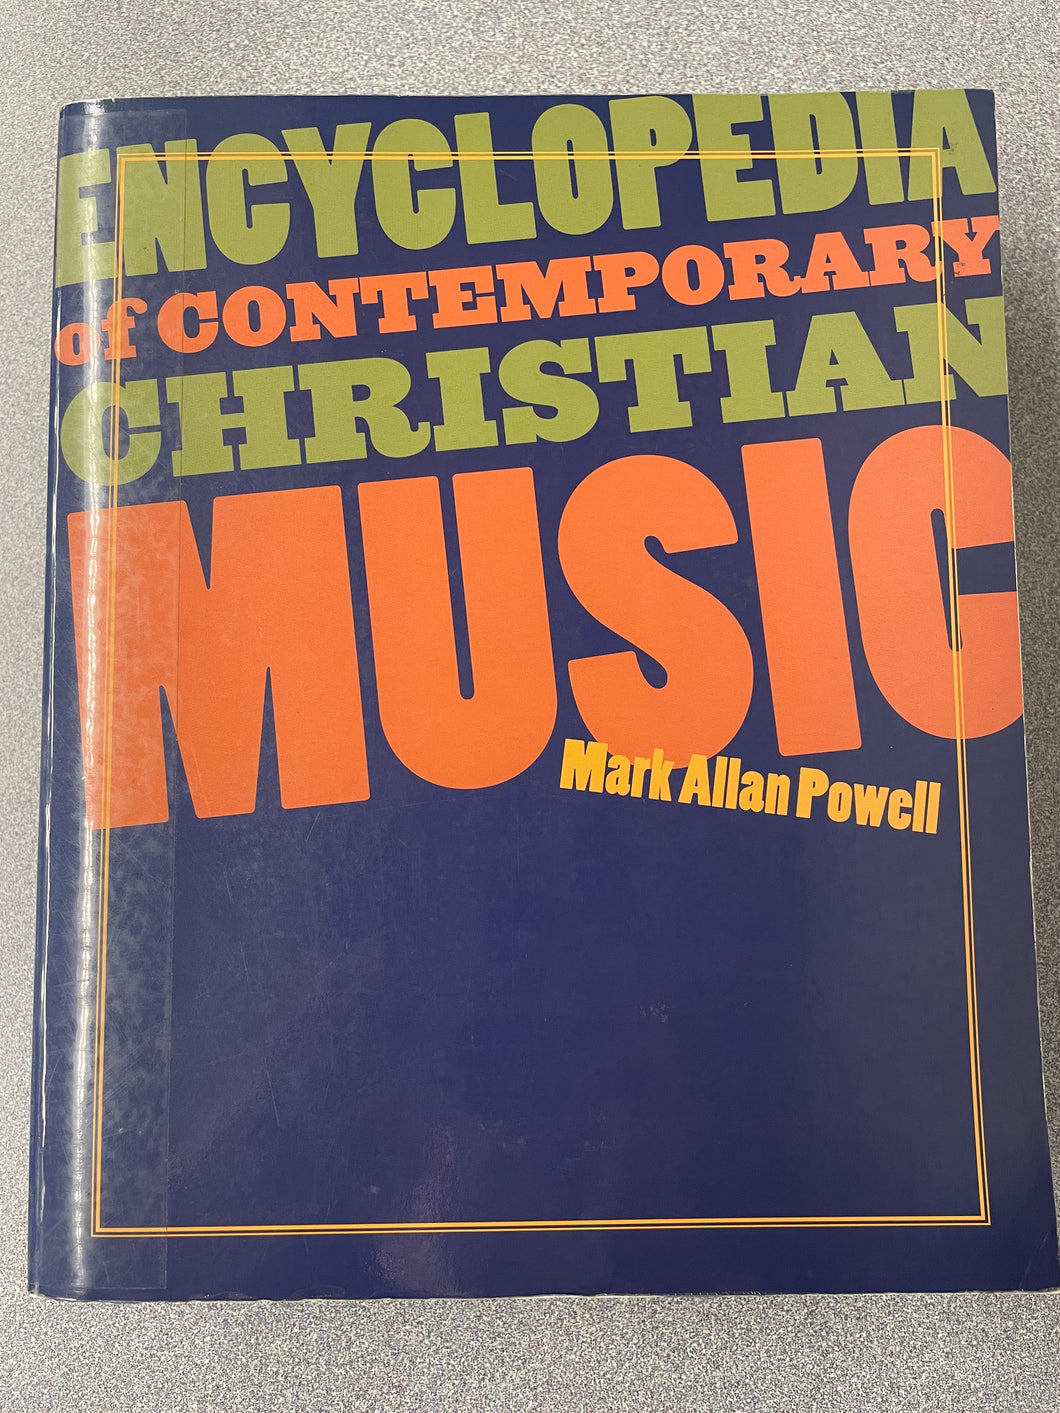 Encyclopedia of Contemporary Christian Music, Powell, Mark Allan [2002] MU 10/23